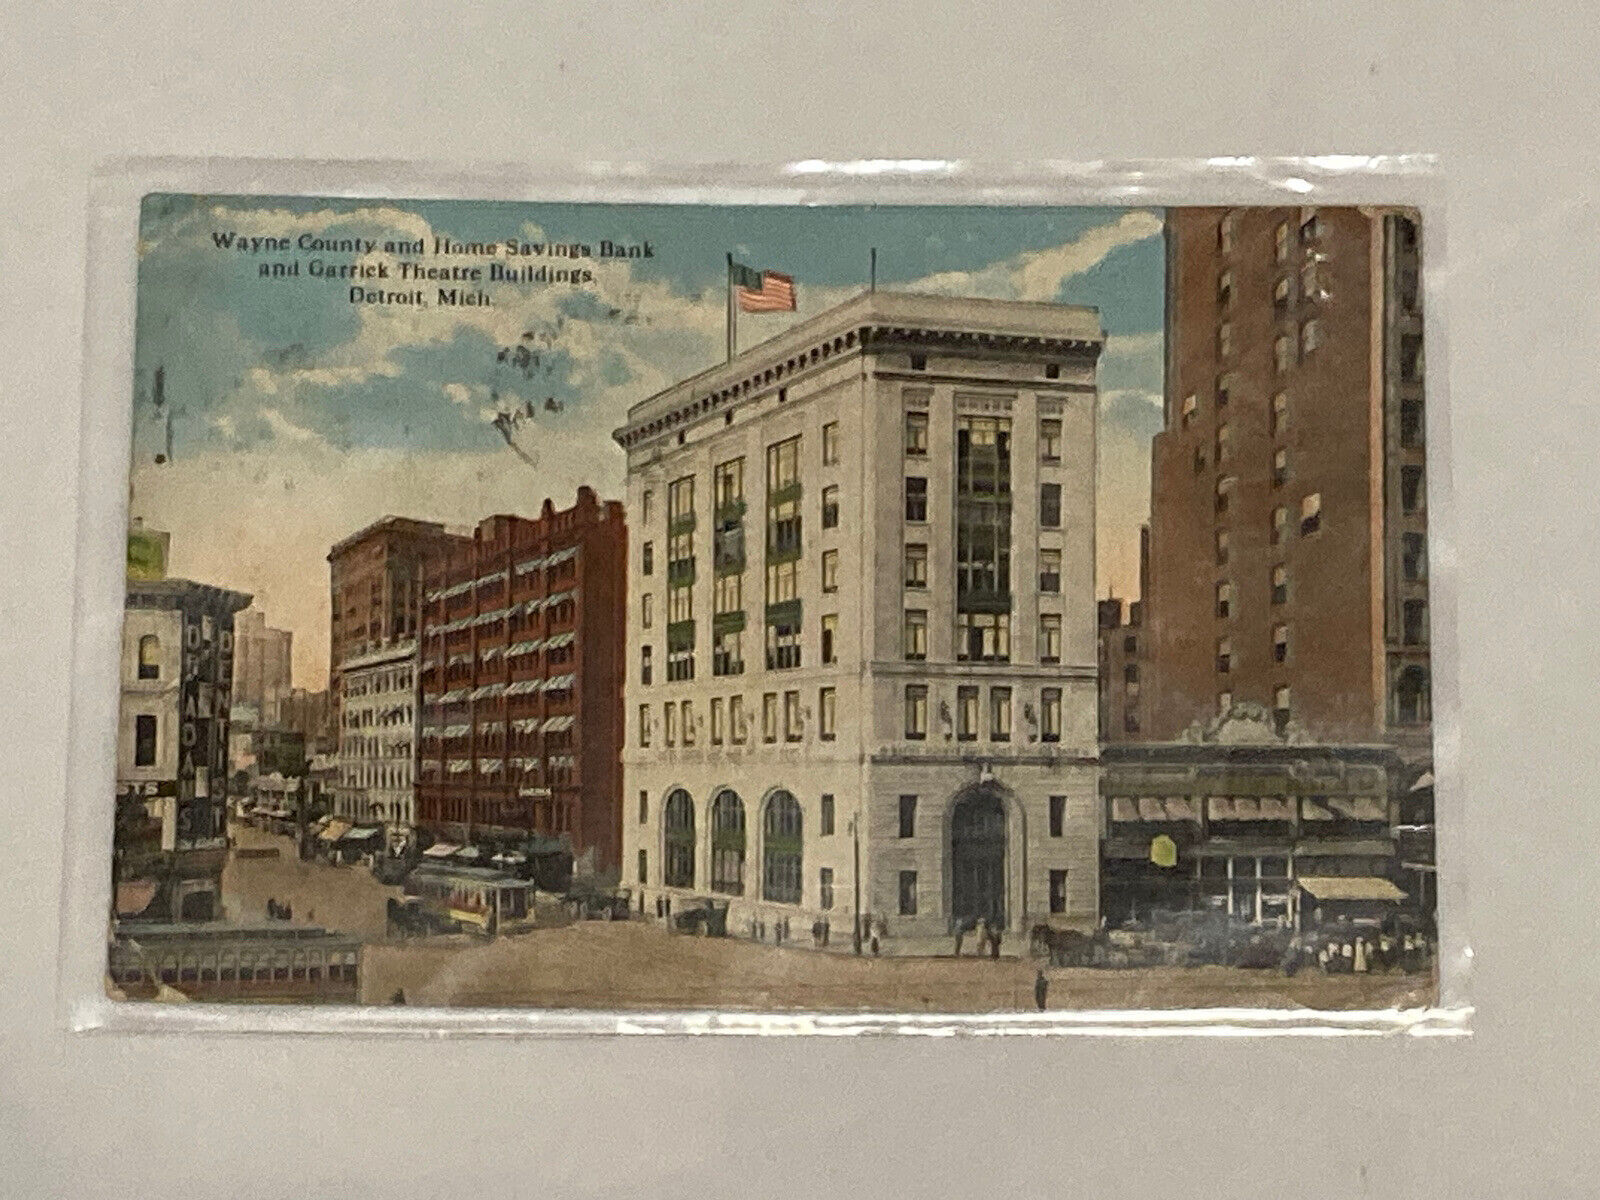 1923 Wayne County and Home Savings Bank Buildings Detroit, Michigan Postcard